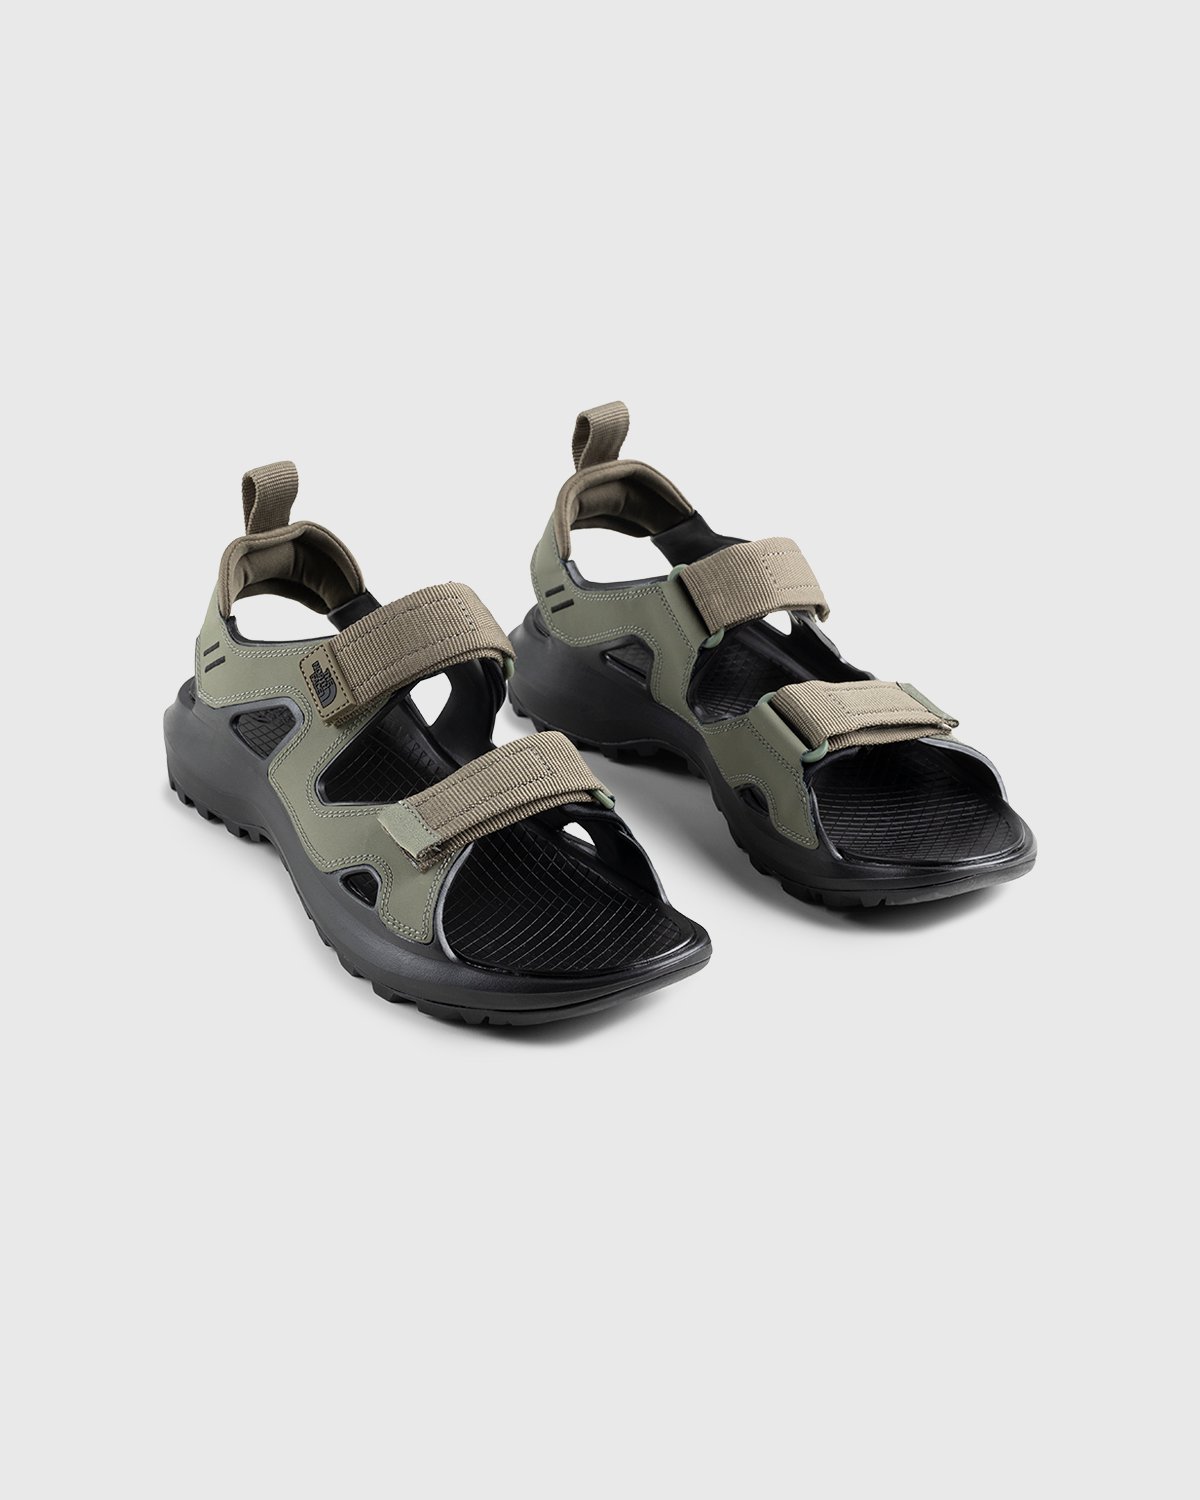 The North Face - Hedgehog Sandal III Burnt Olive Green/Black - Footwear - Green - Image 4